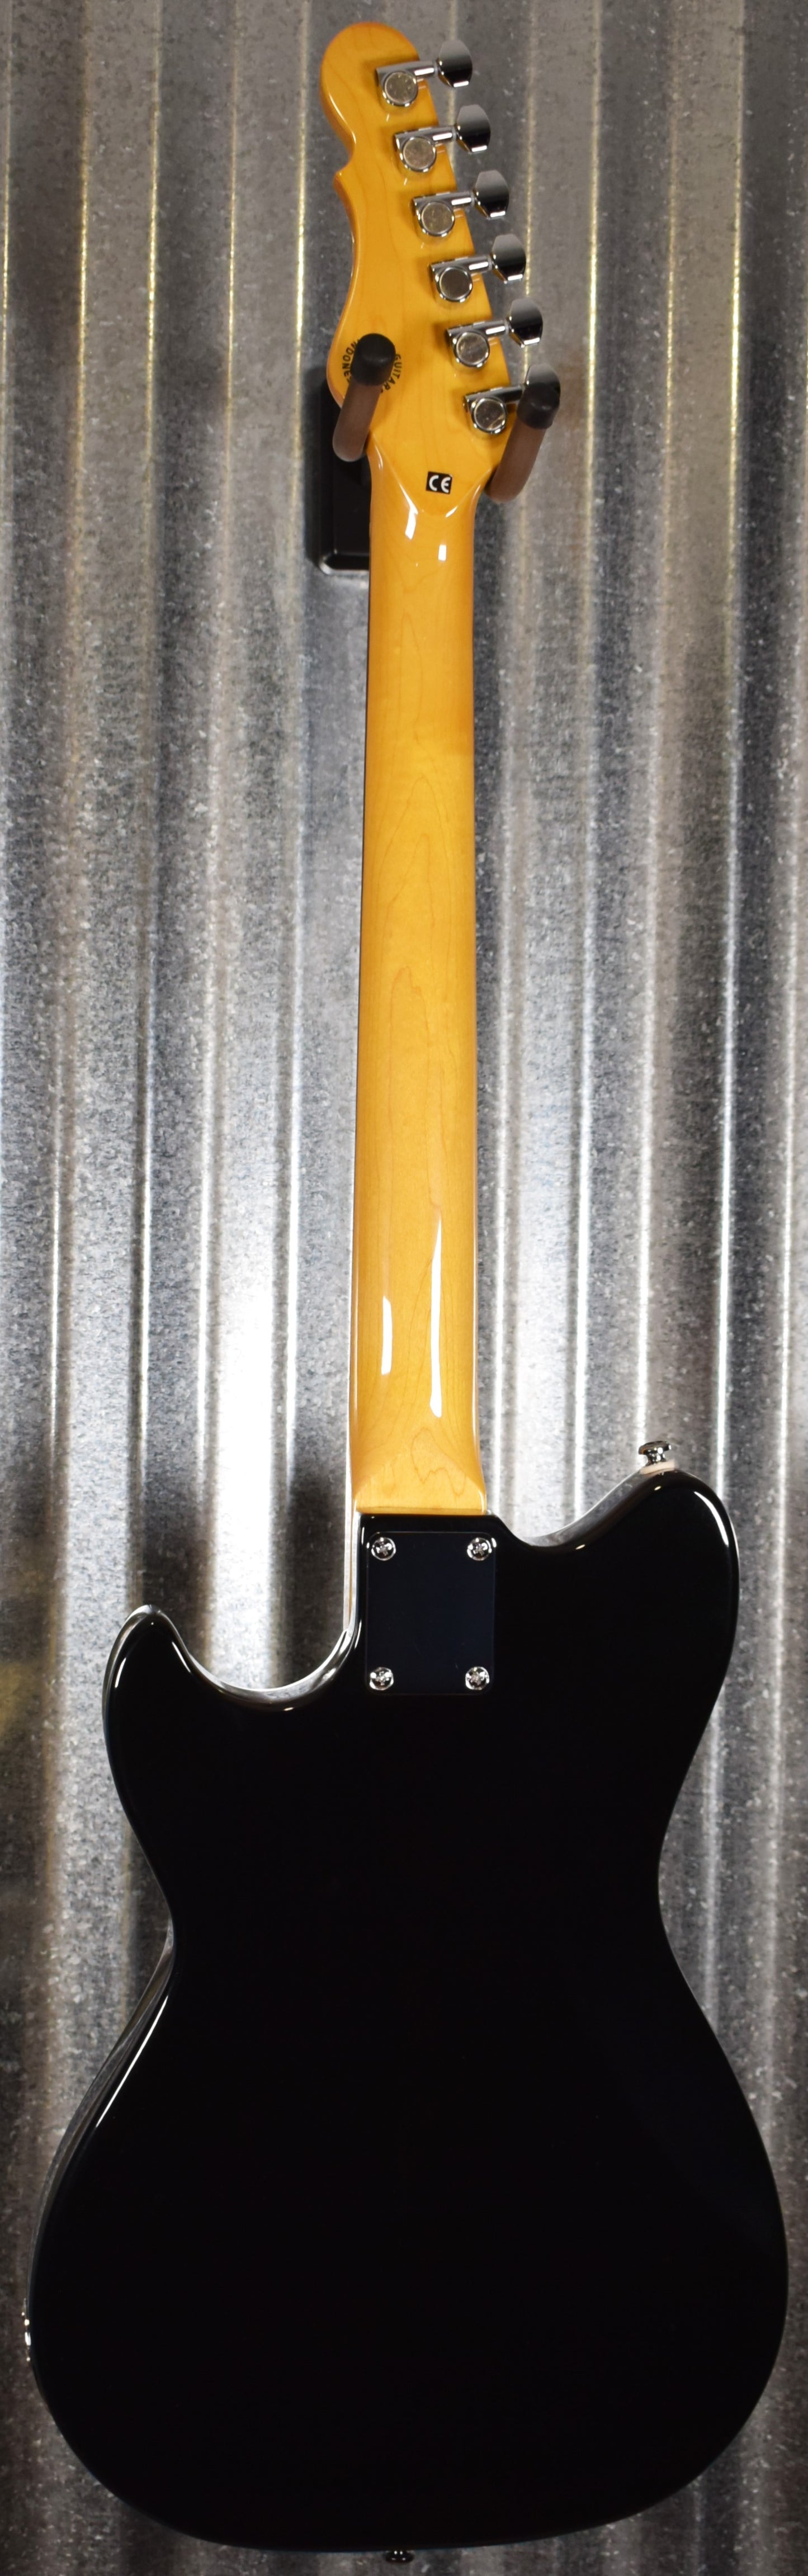 G&L Tribute Fallout Gloss Black Guitar #2322 Used